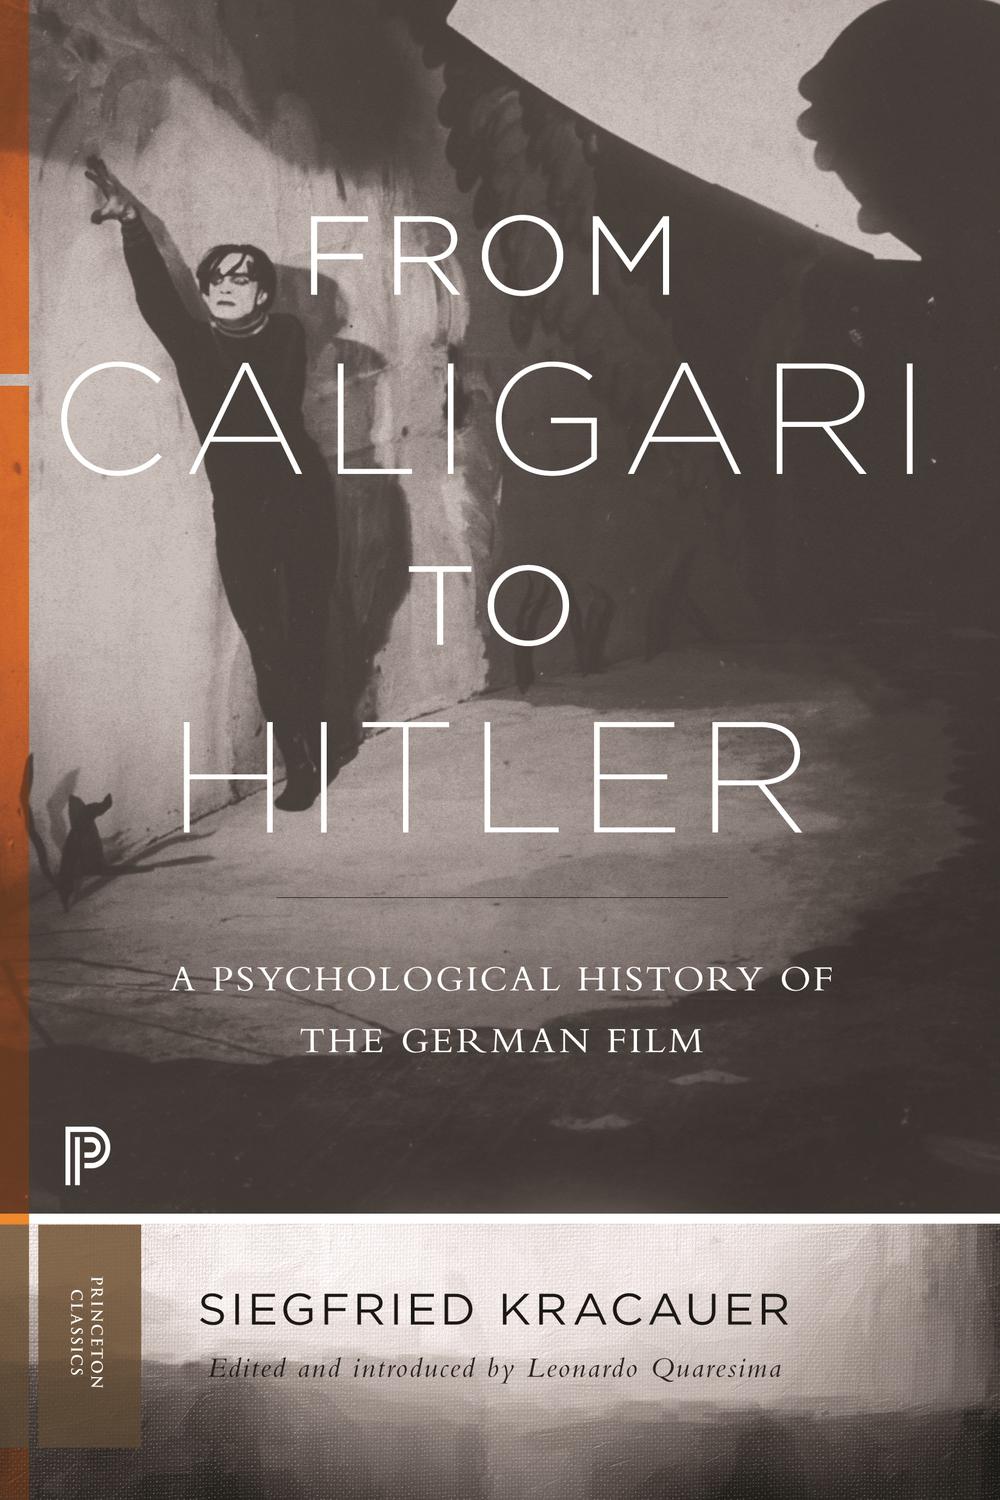 From Caligari to Hitler : A Psychological History of the German Film ร้านหนังสือและสิ่งของ เป็นร้านหนังสือภาษาอังกฤษหายาก และร้านกาแฟ หรือ บุ๊คคาเฟ่ ตั้งอยู่สุขุมวิท กรุงเทพ